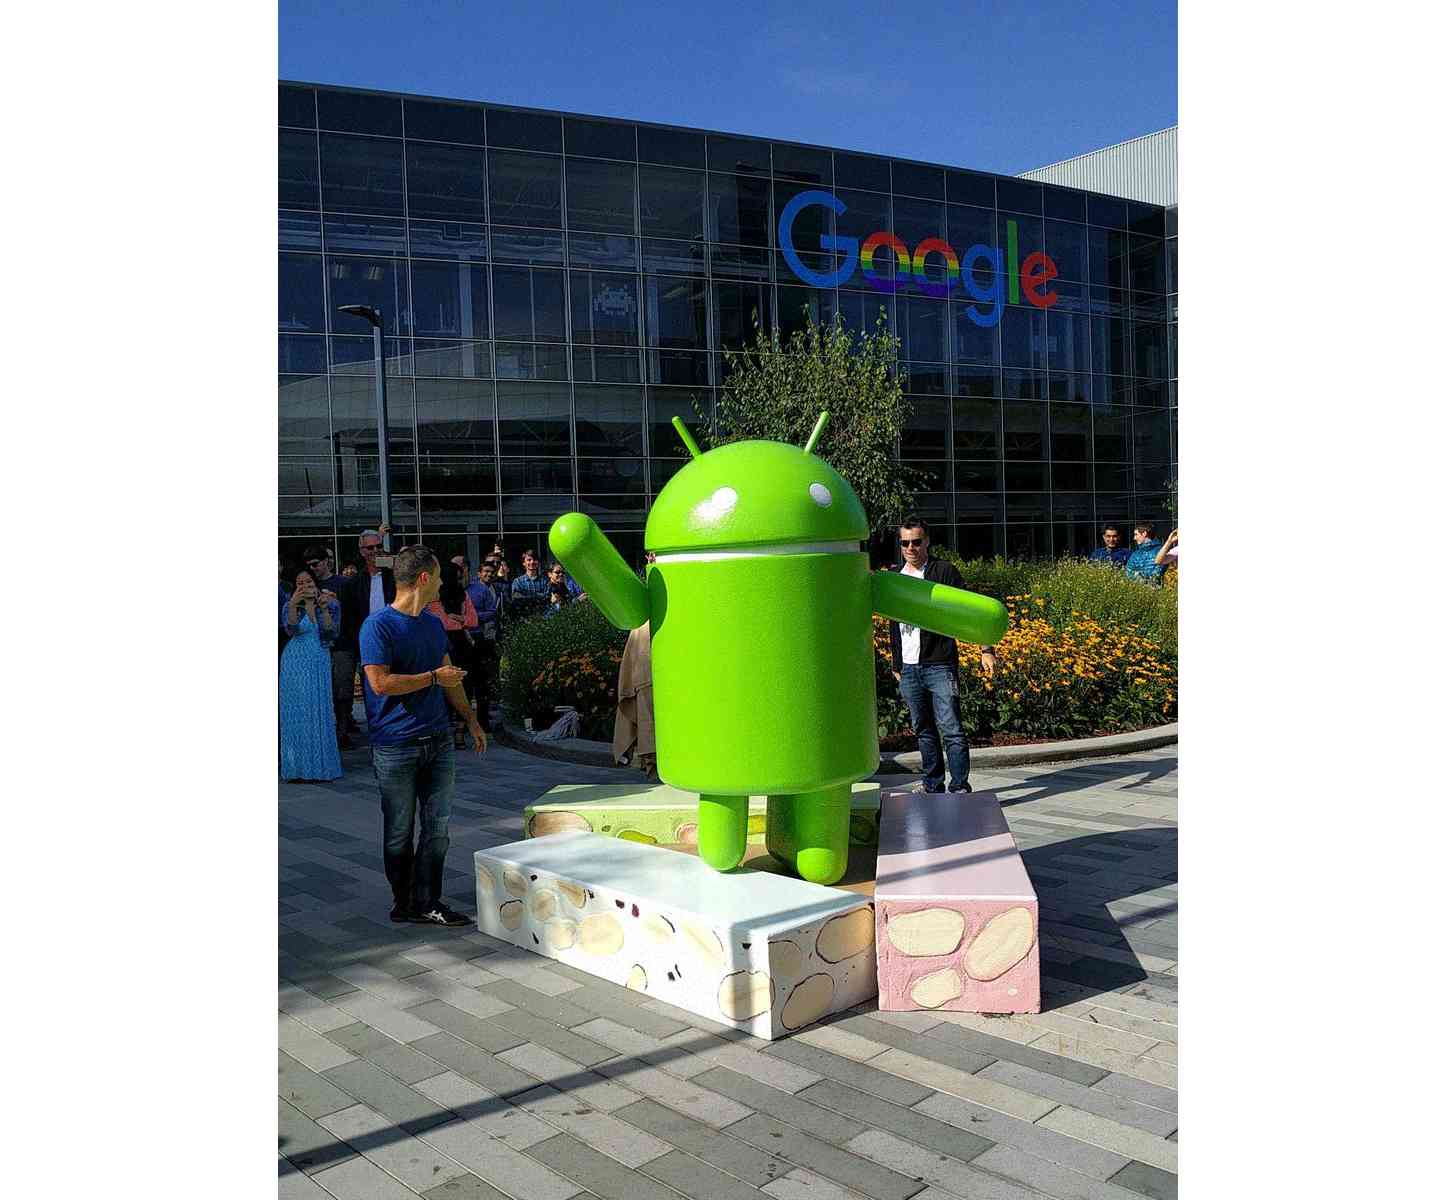 Android 7.0 Nougat statue Google headquarters